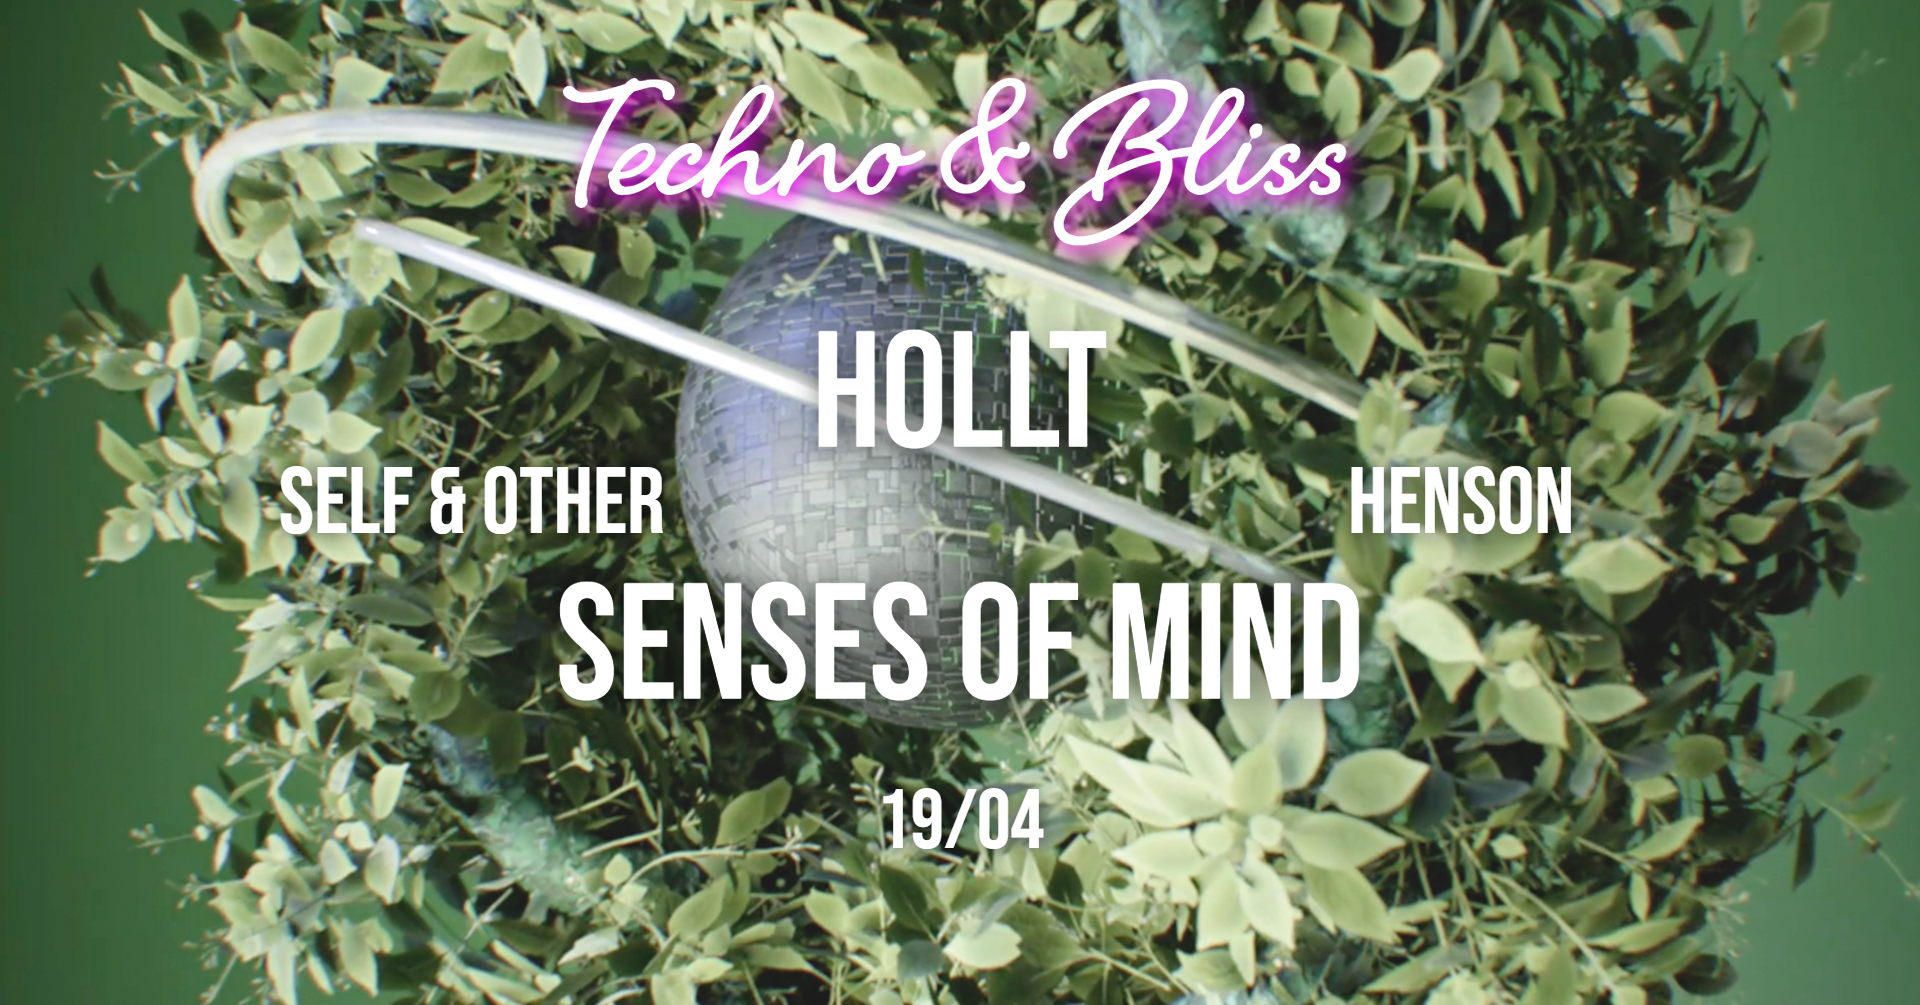 Techno & Bliss: Hollt - Senses Of Mind - フライヤー表